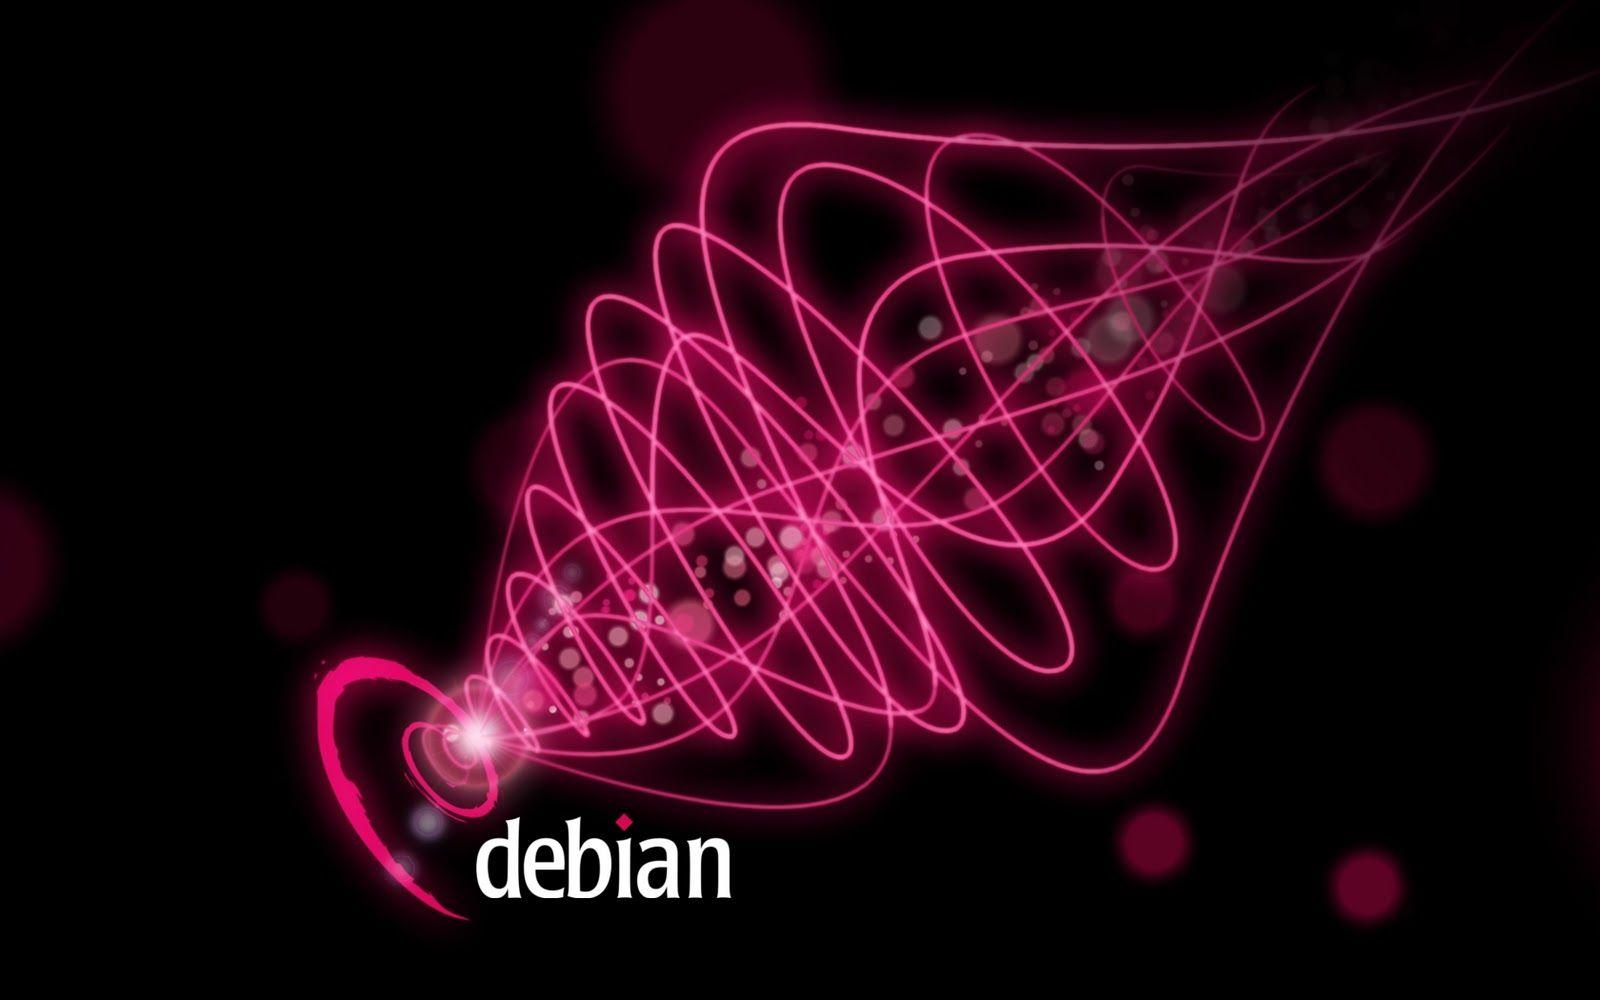 Debian Wallpaper Background and Wallpaper